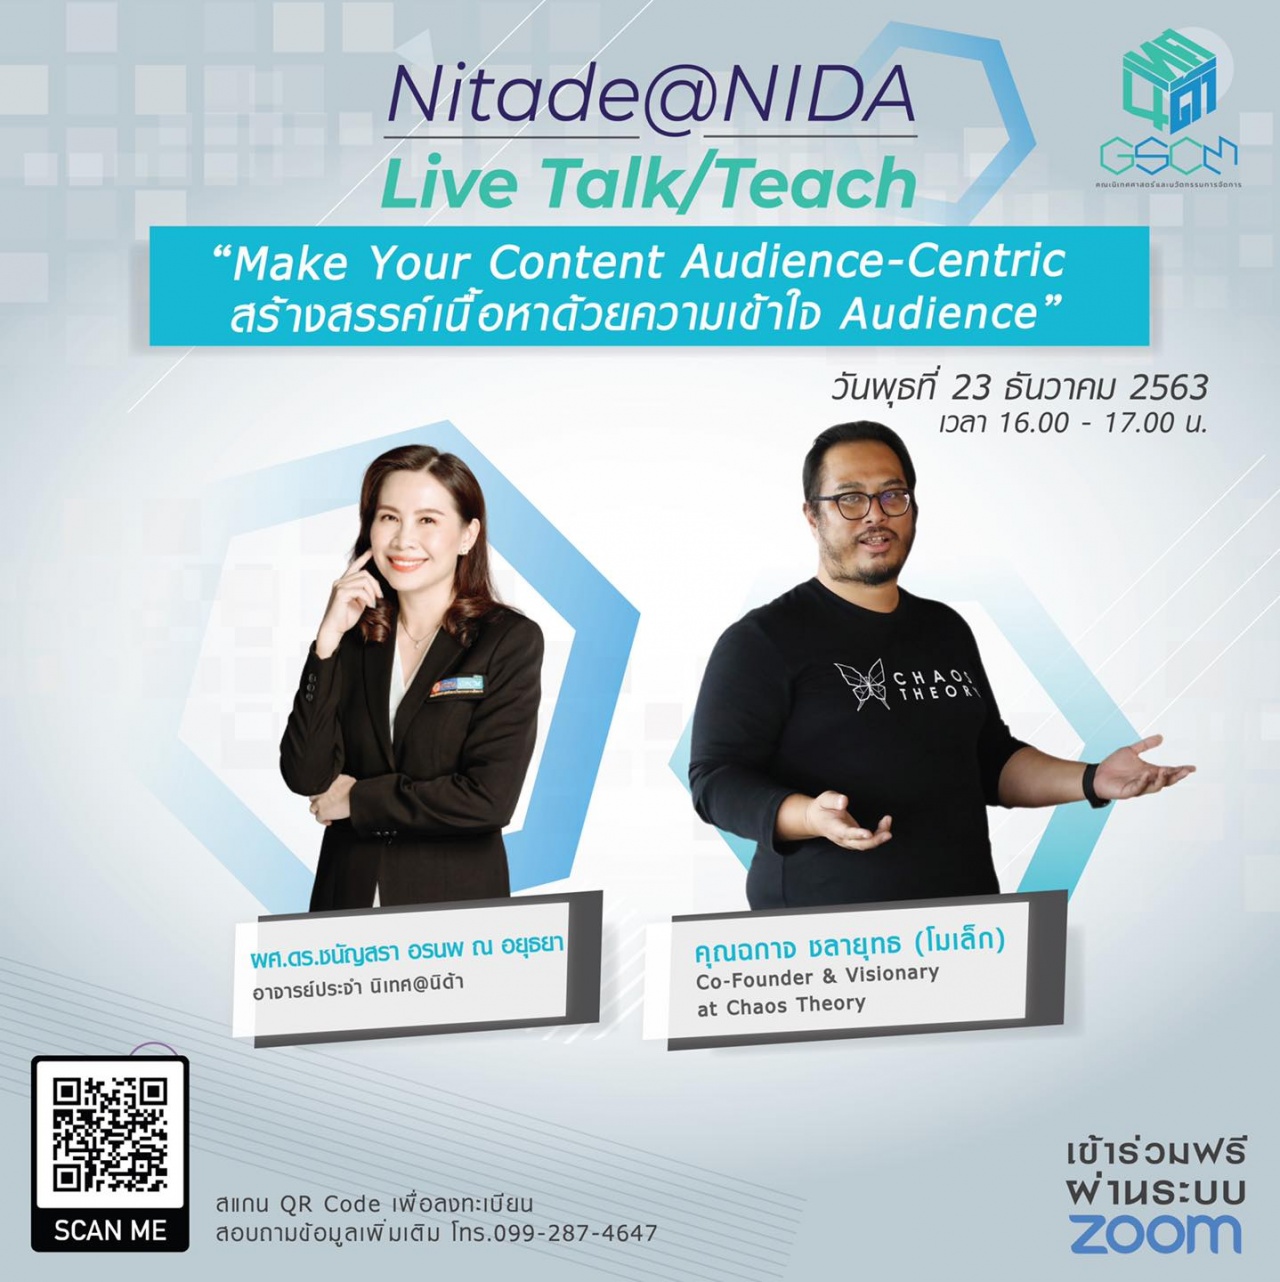  Nitade@NIDA Live Talk/Teach ในหัวข้อ "Make your content audience-centric สร้างสรรค์เนื้อหาด้วยความเข้าใจ Audience"